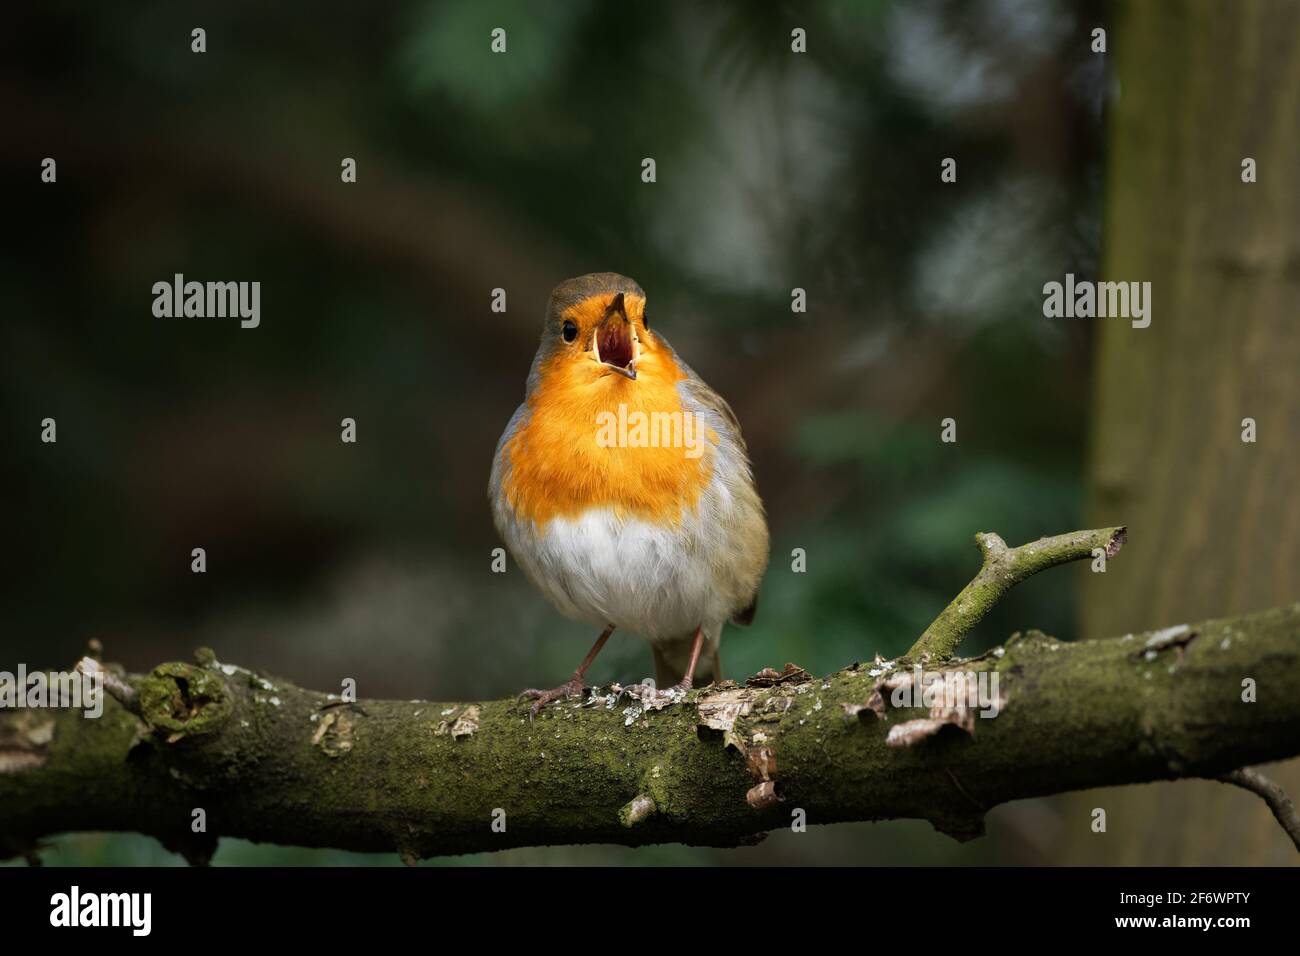 robin on a branch singing joyfully with beak wide open Stock Photo